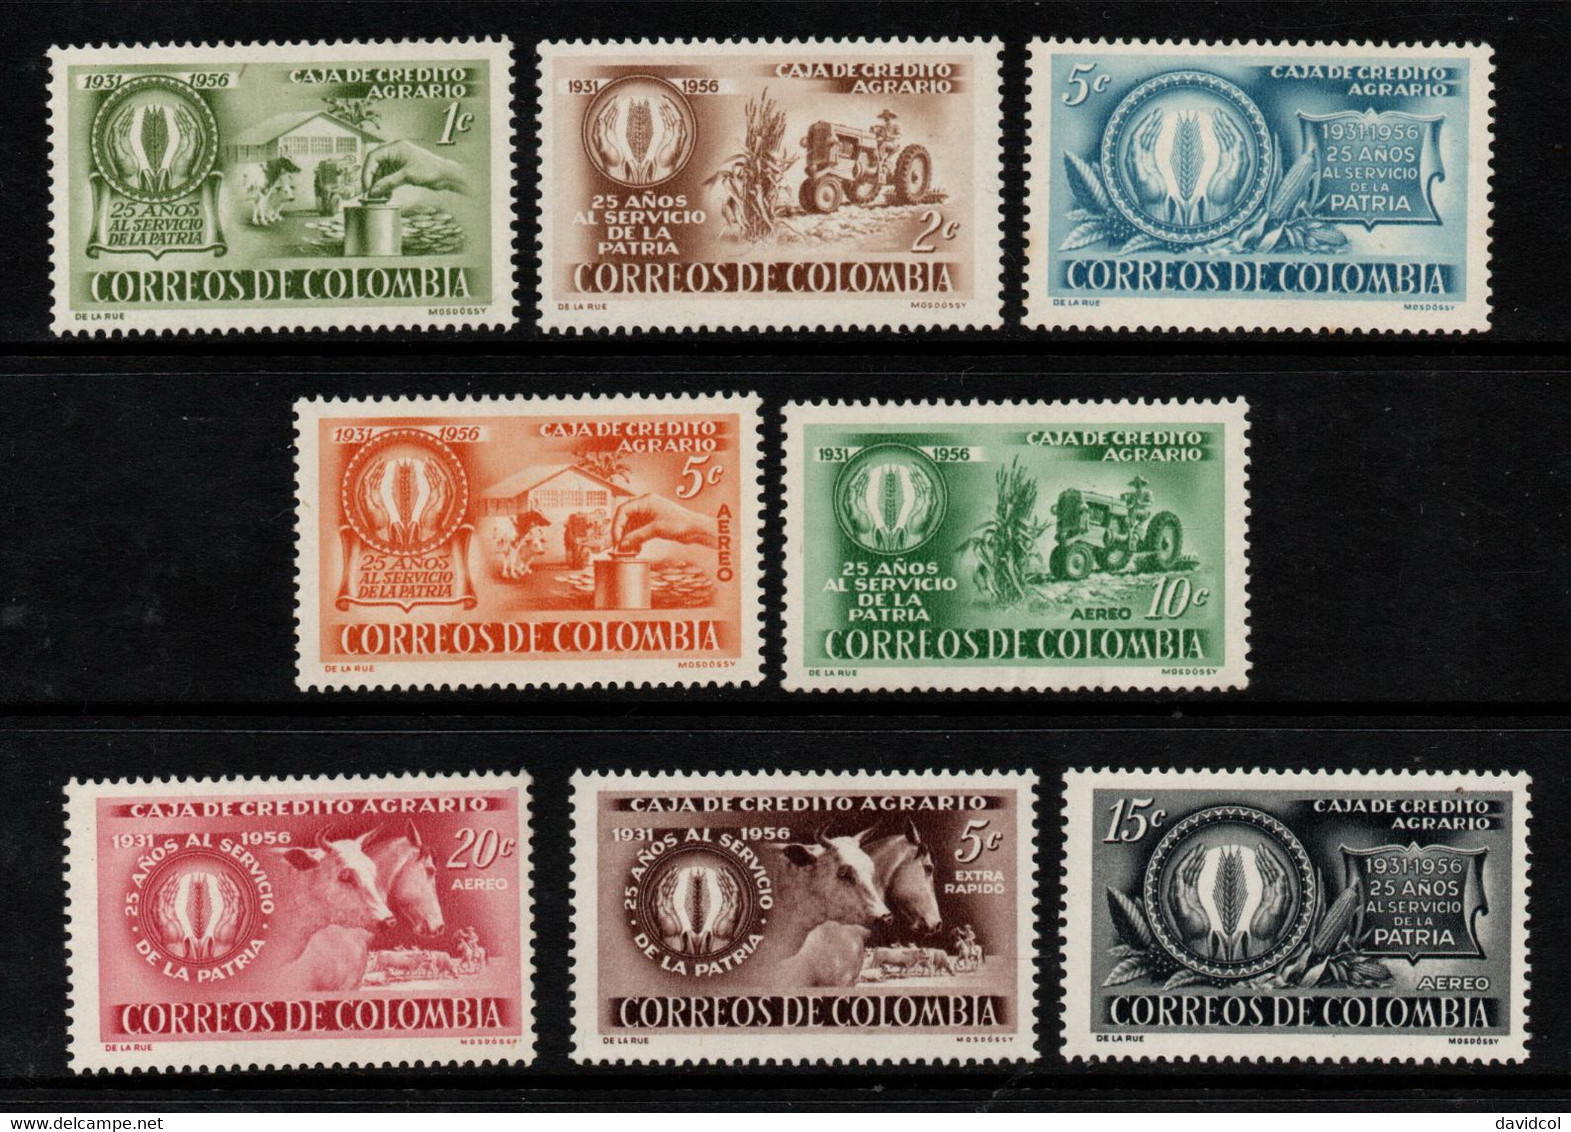 01- KOLUMBIEN - 1957 - MNH - MI#: 798-805 - 50 YEARS BANK "CAJA DE CREDITO AGRARIO" - Colombie